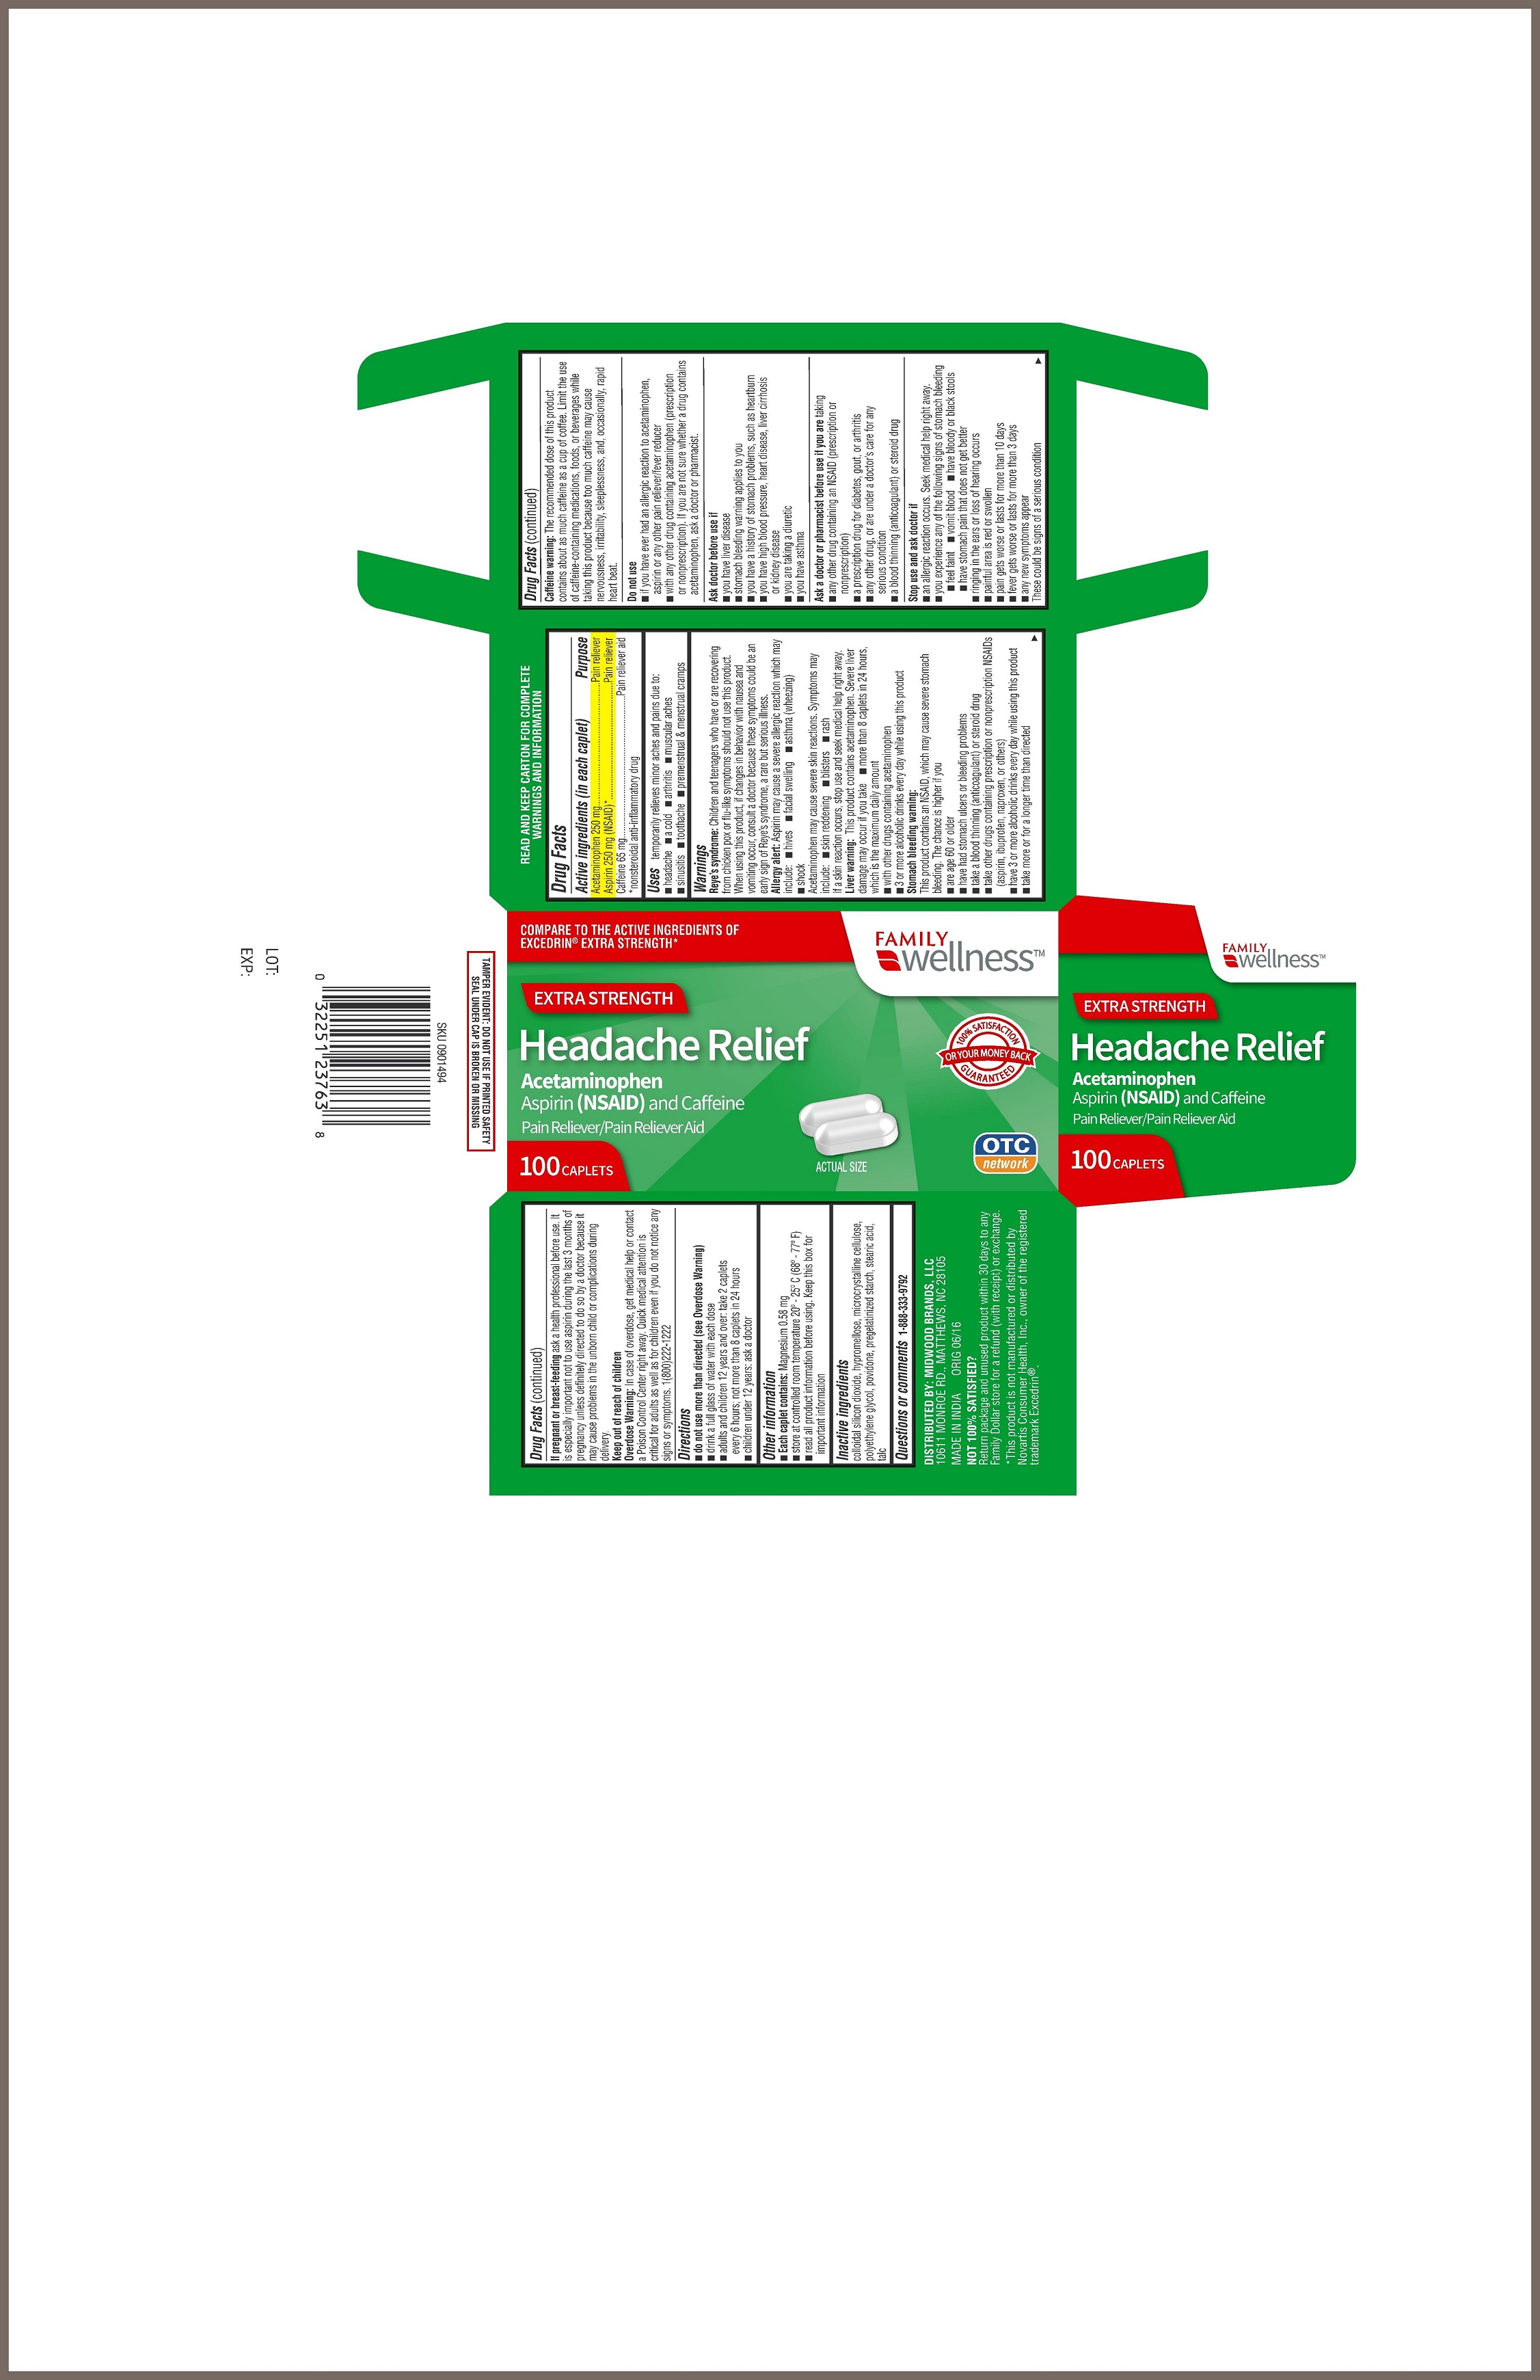 PRINCIPAL DISPLAY PANEL - 100 Caplet Bottle Carton